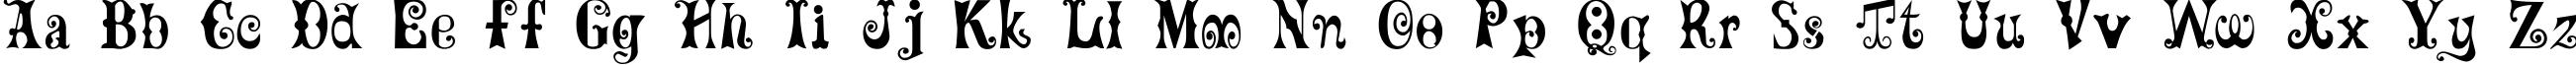 Пример написания английского алфавита шрифтом MaxCircus